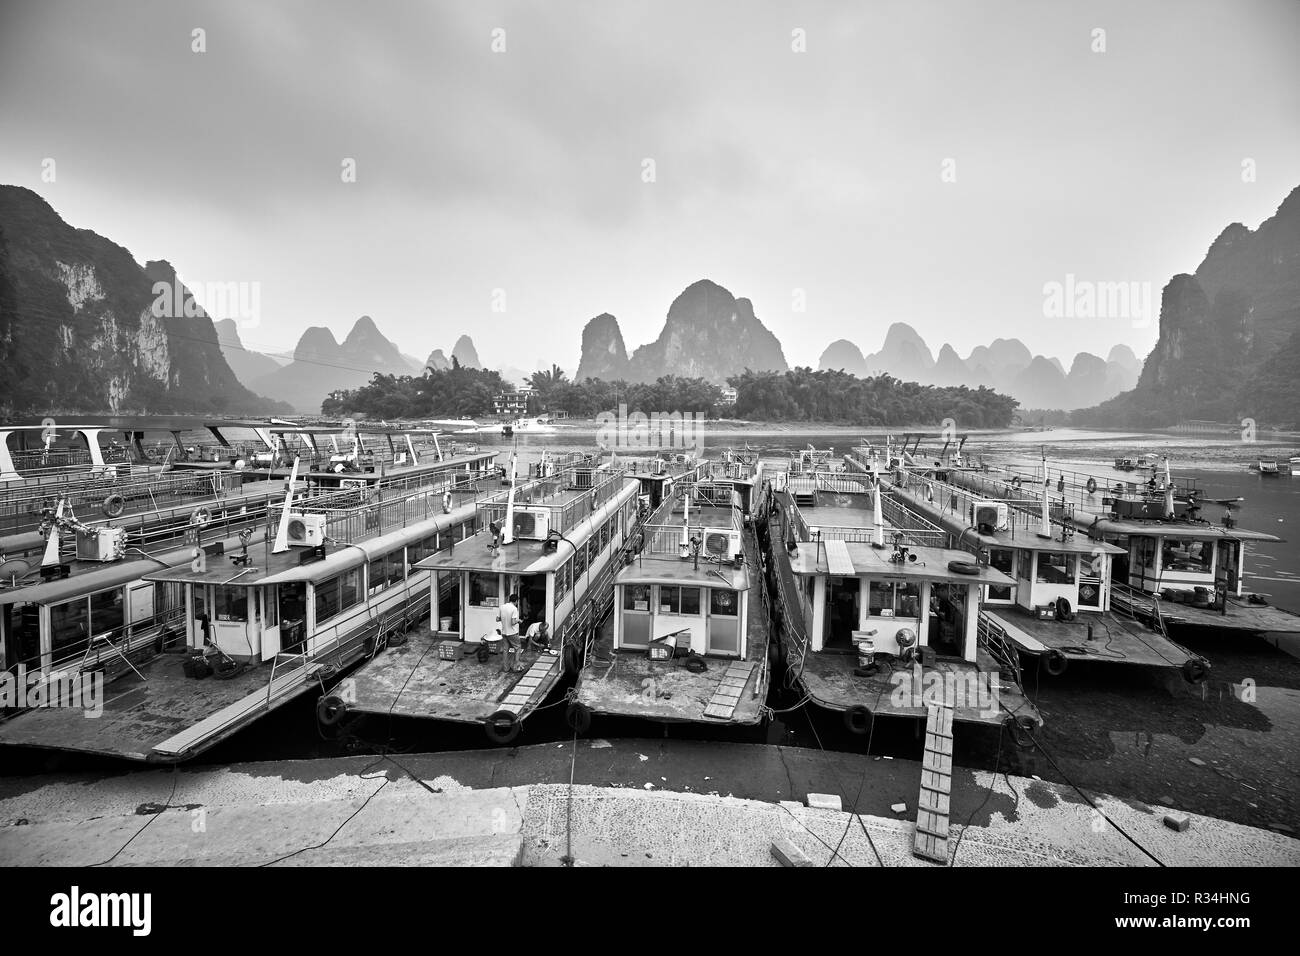 Xingping, Guangxi, China - 18 de septiembre de 2017: los barcos anclados en el río Lijiang banco. Foto de stock